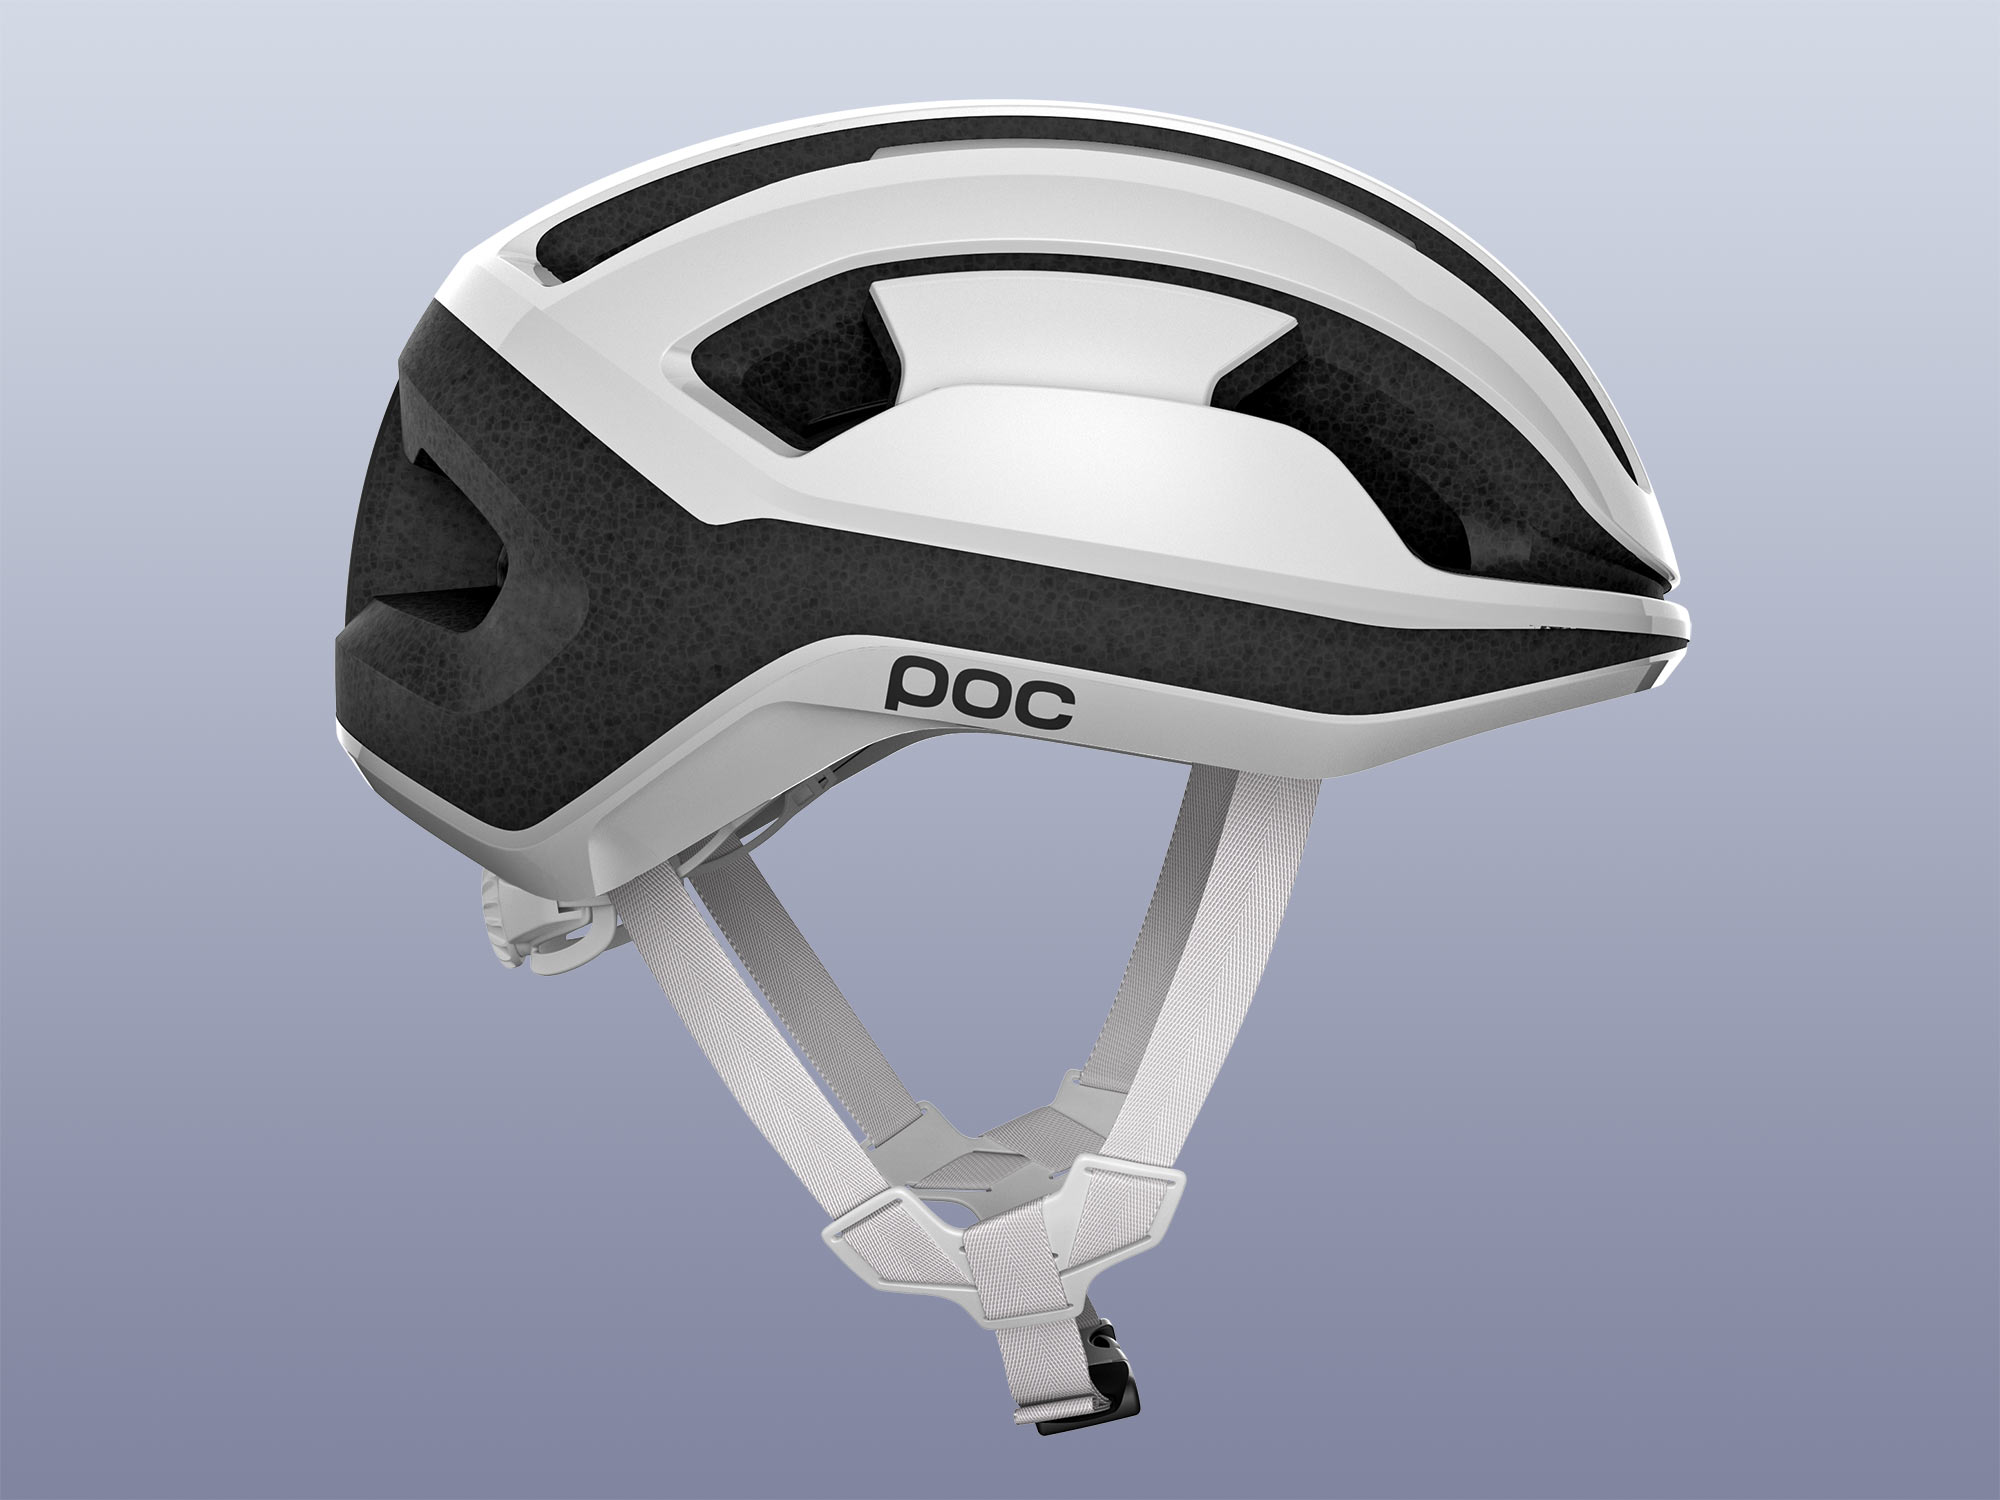 POC Omne Ultra Helmet Straps On Adventure Mounts, while Omne Lite